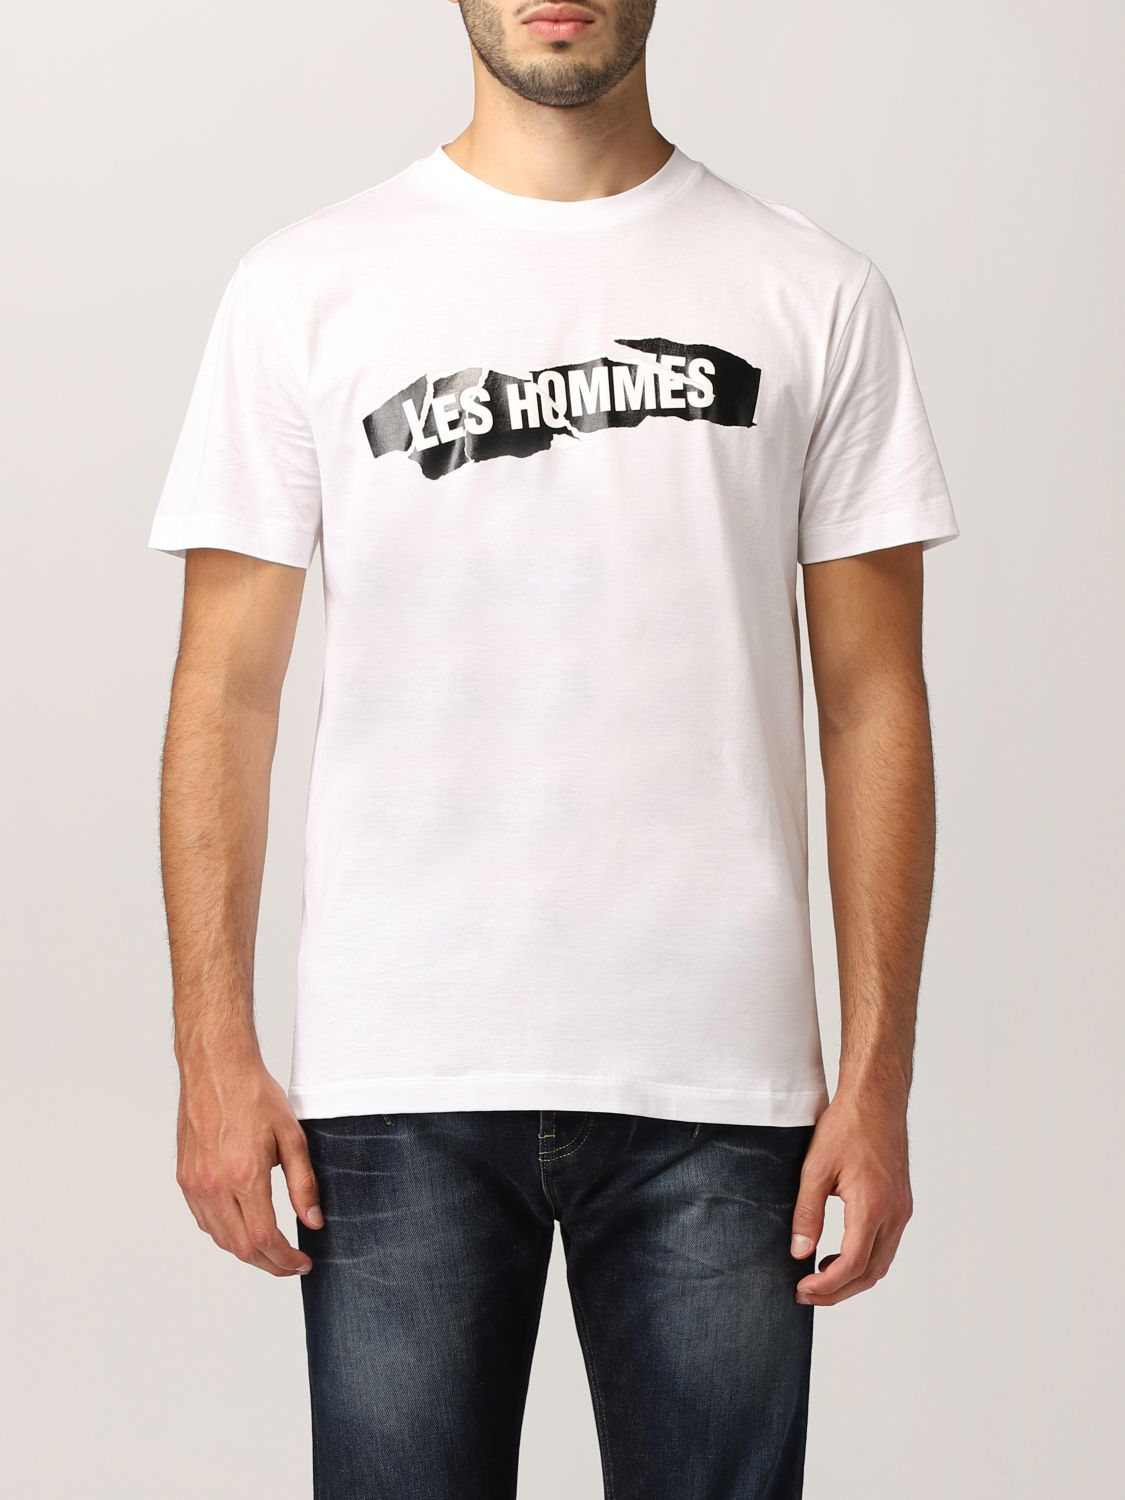 Tシャツ Les Hommes: Tシャツ メンズ Les Hommes ホワイト 1